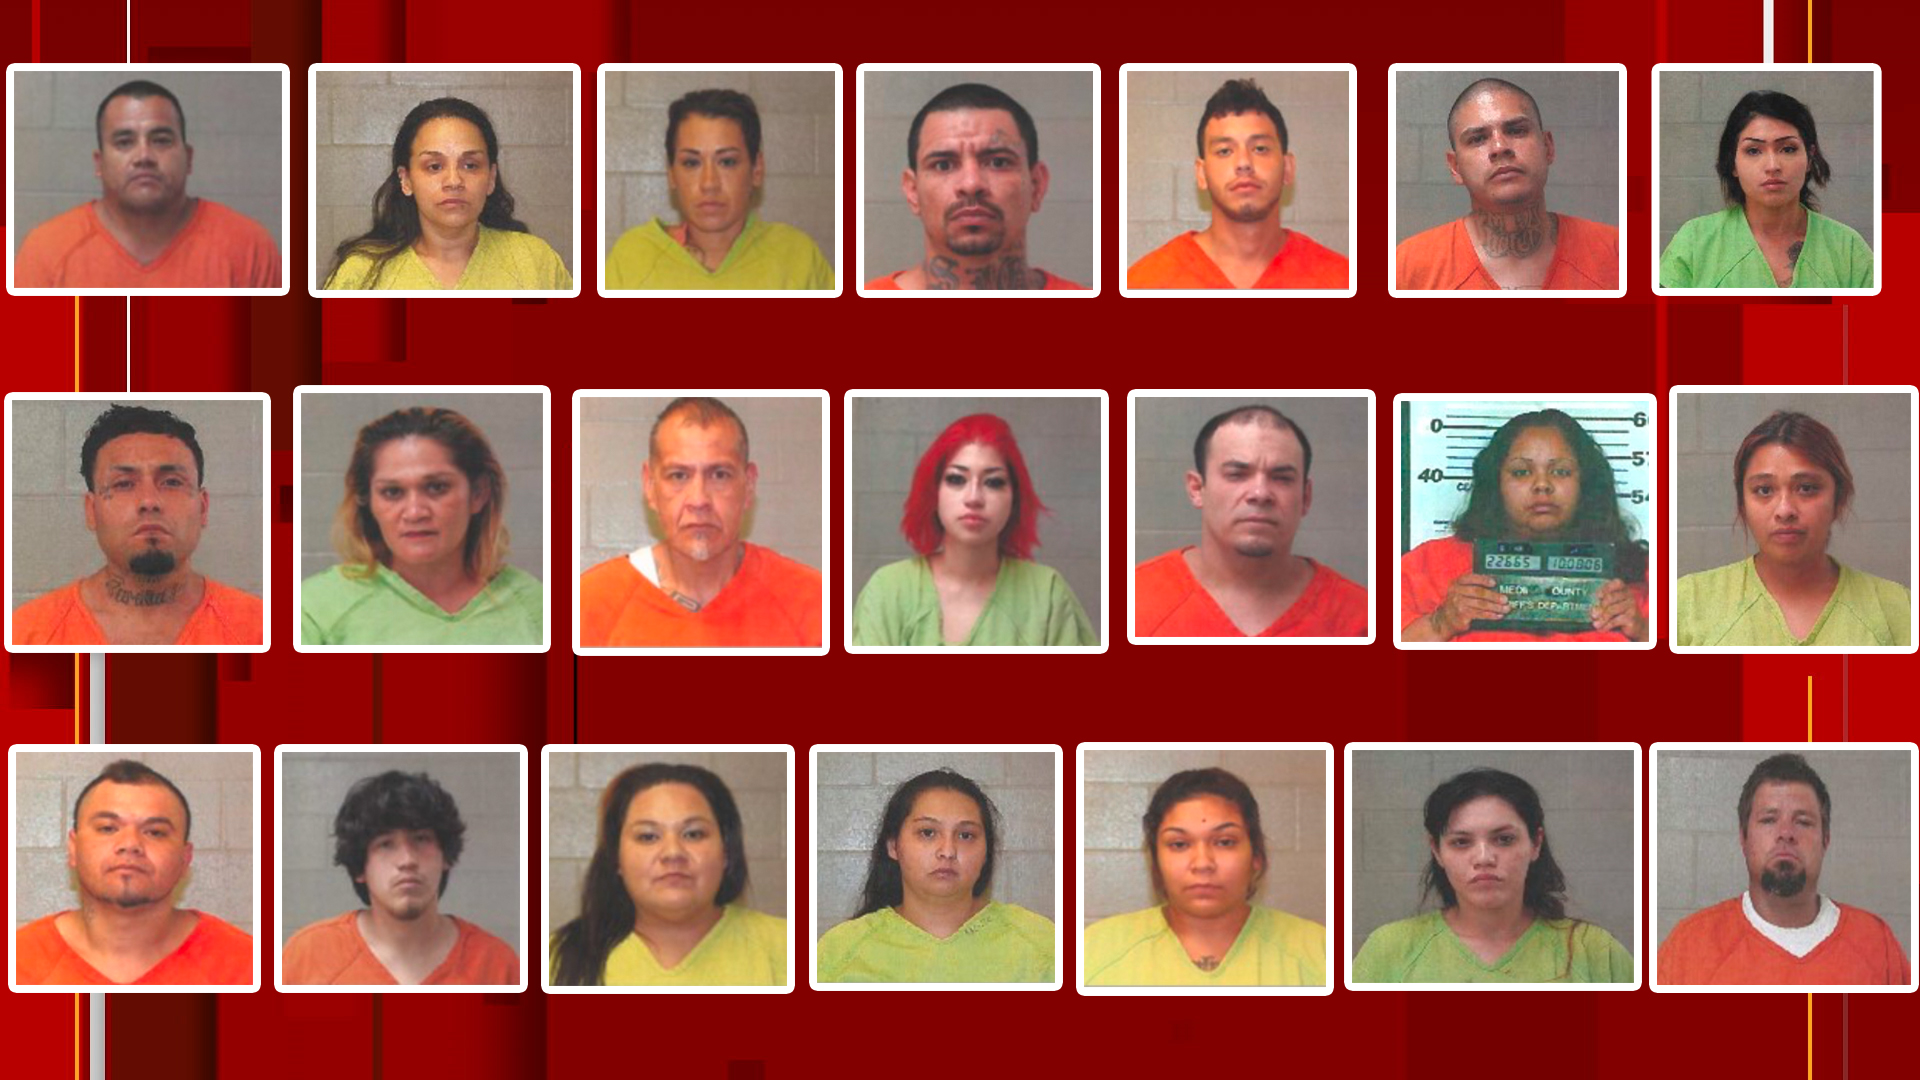 25 people arrested after massive drug bust in San Antonio area